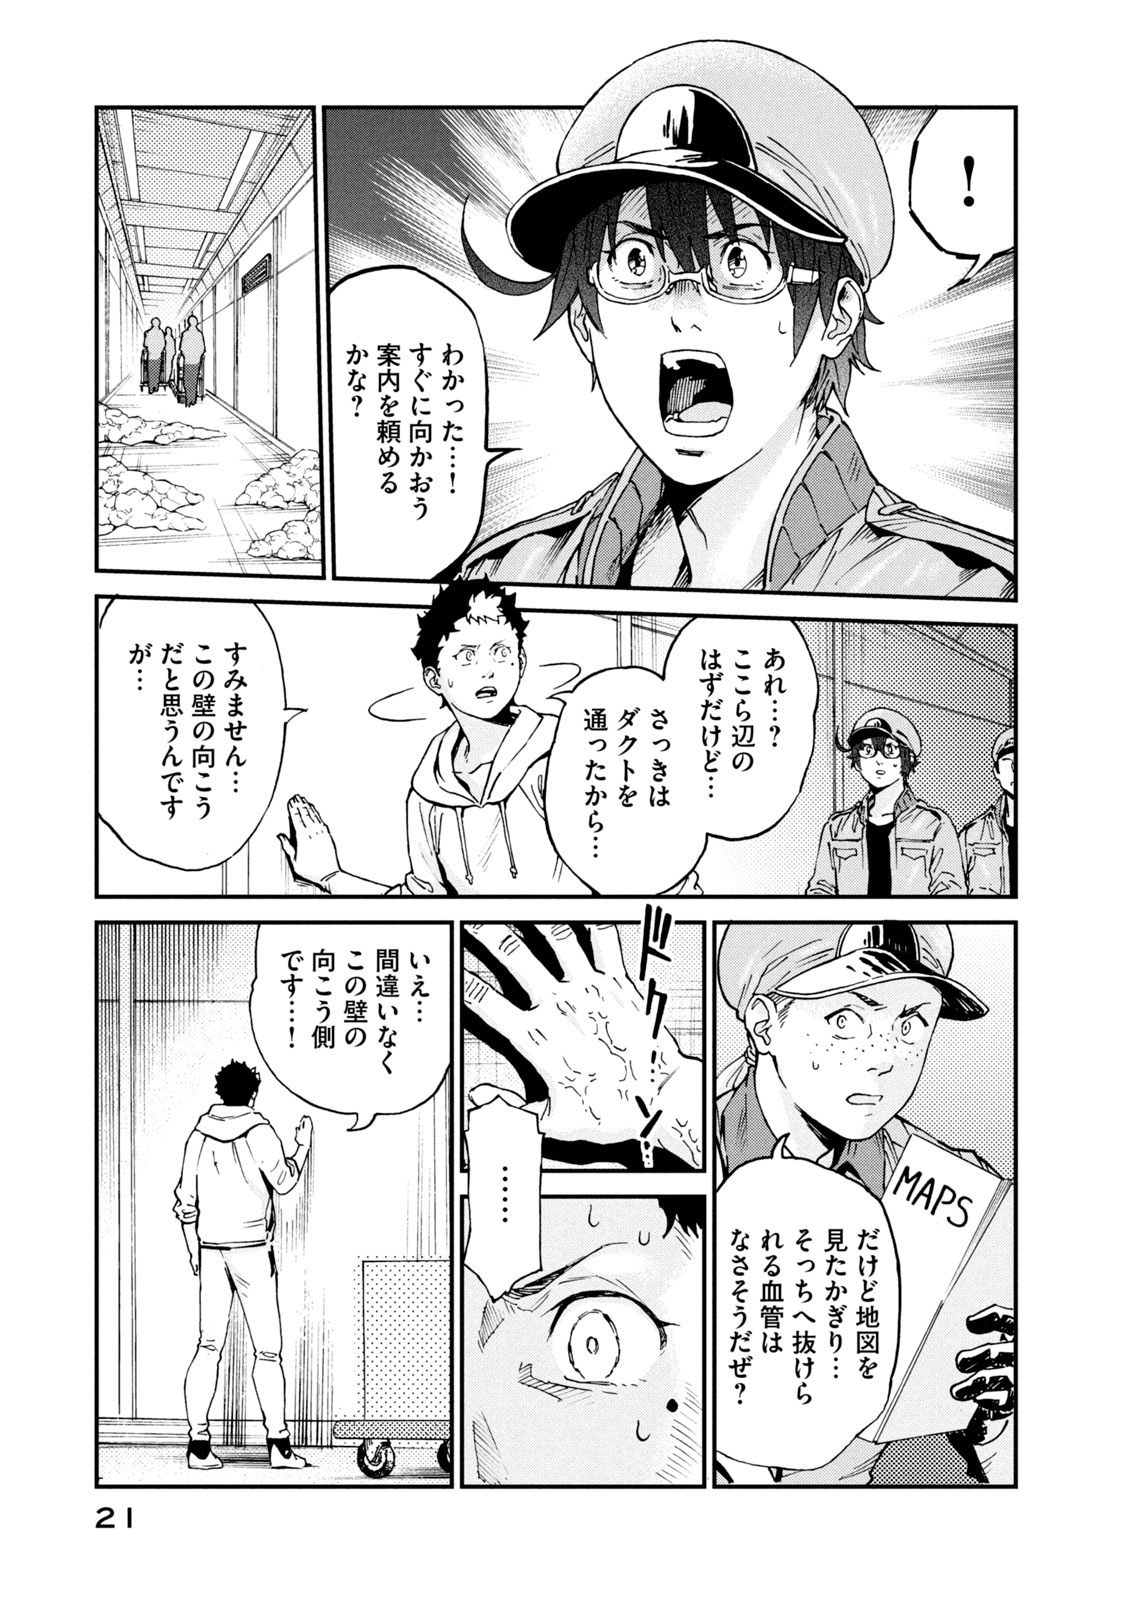 Hataraku Saibou BLACK - Chapter 37 - Page 23